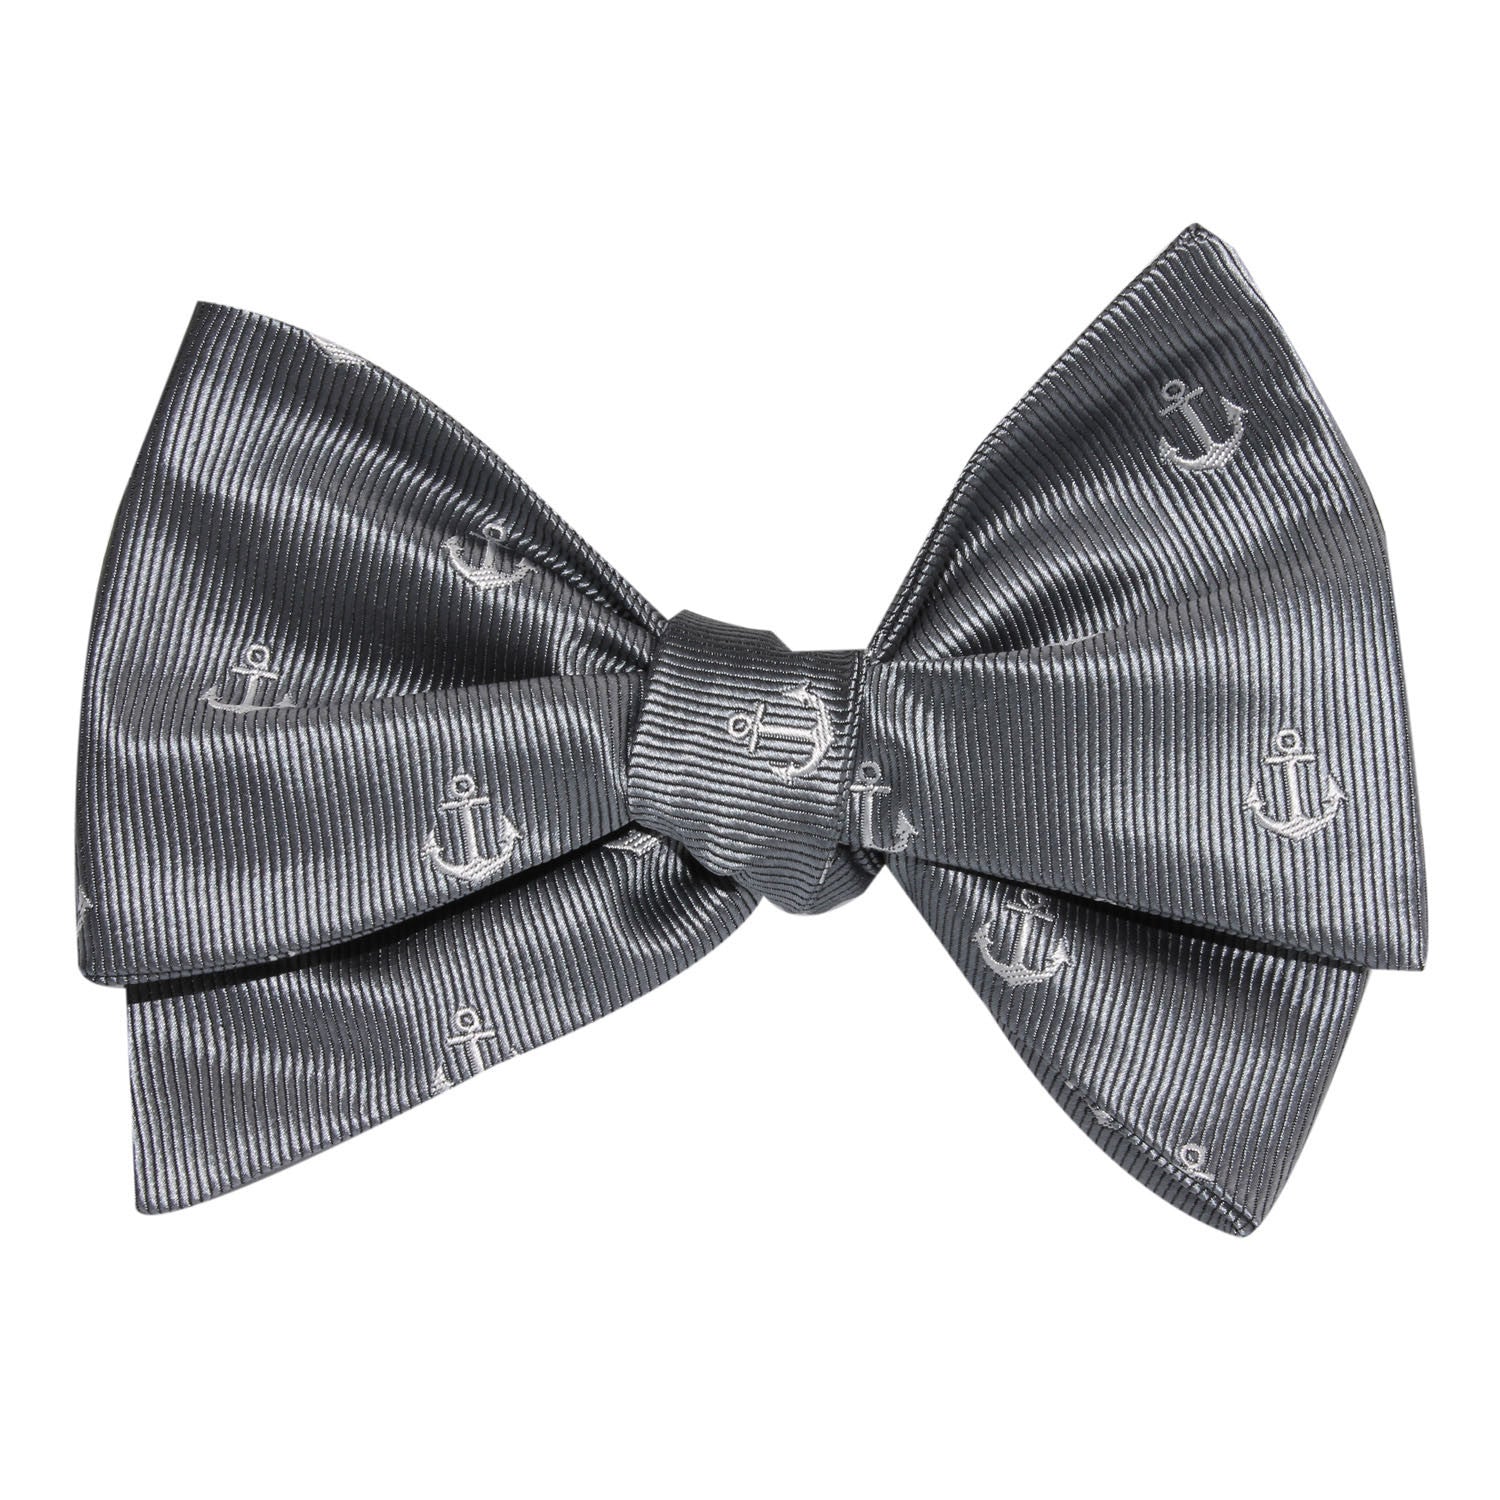 The OTAA Charcoal Grey Anchor Self Tie Bow Tie 2